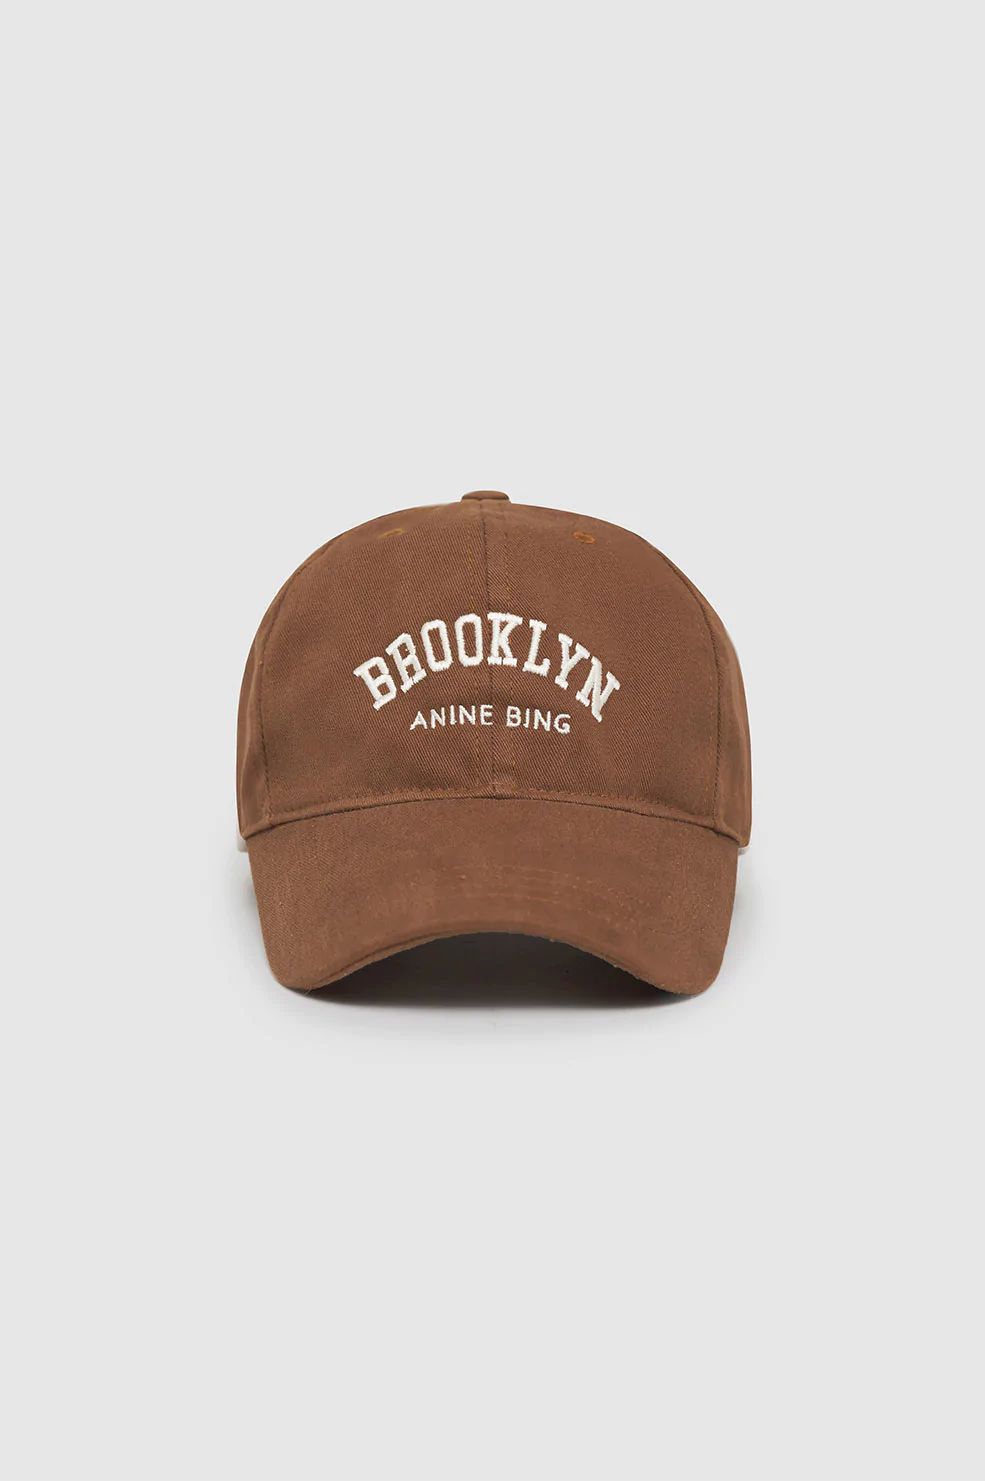 Jeremy Baseball Cap University Brooklyn | Anine Bing